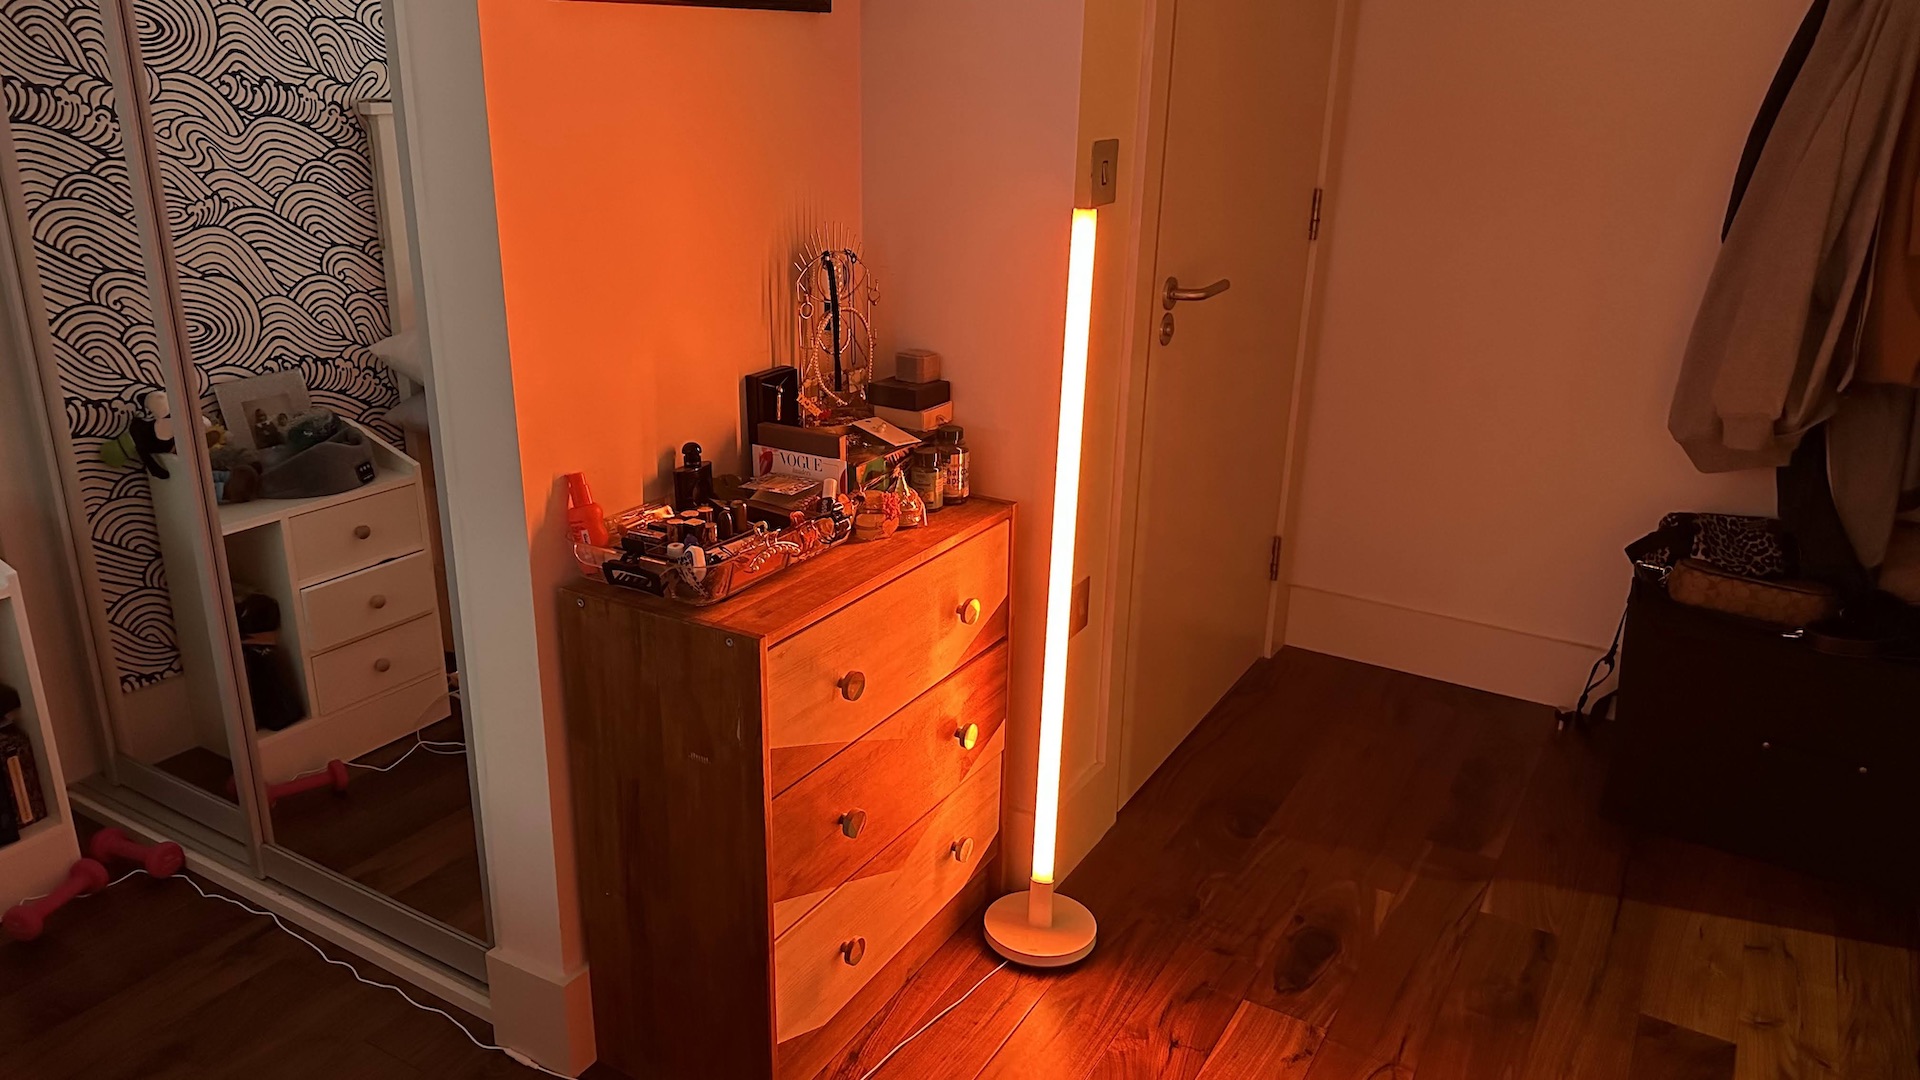 Wiz Luminaire Pole Floor Light glowing orange in a living room corner.